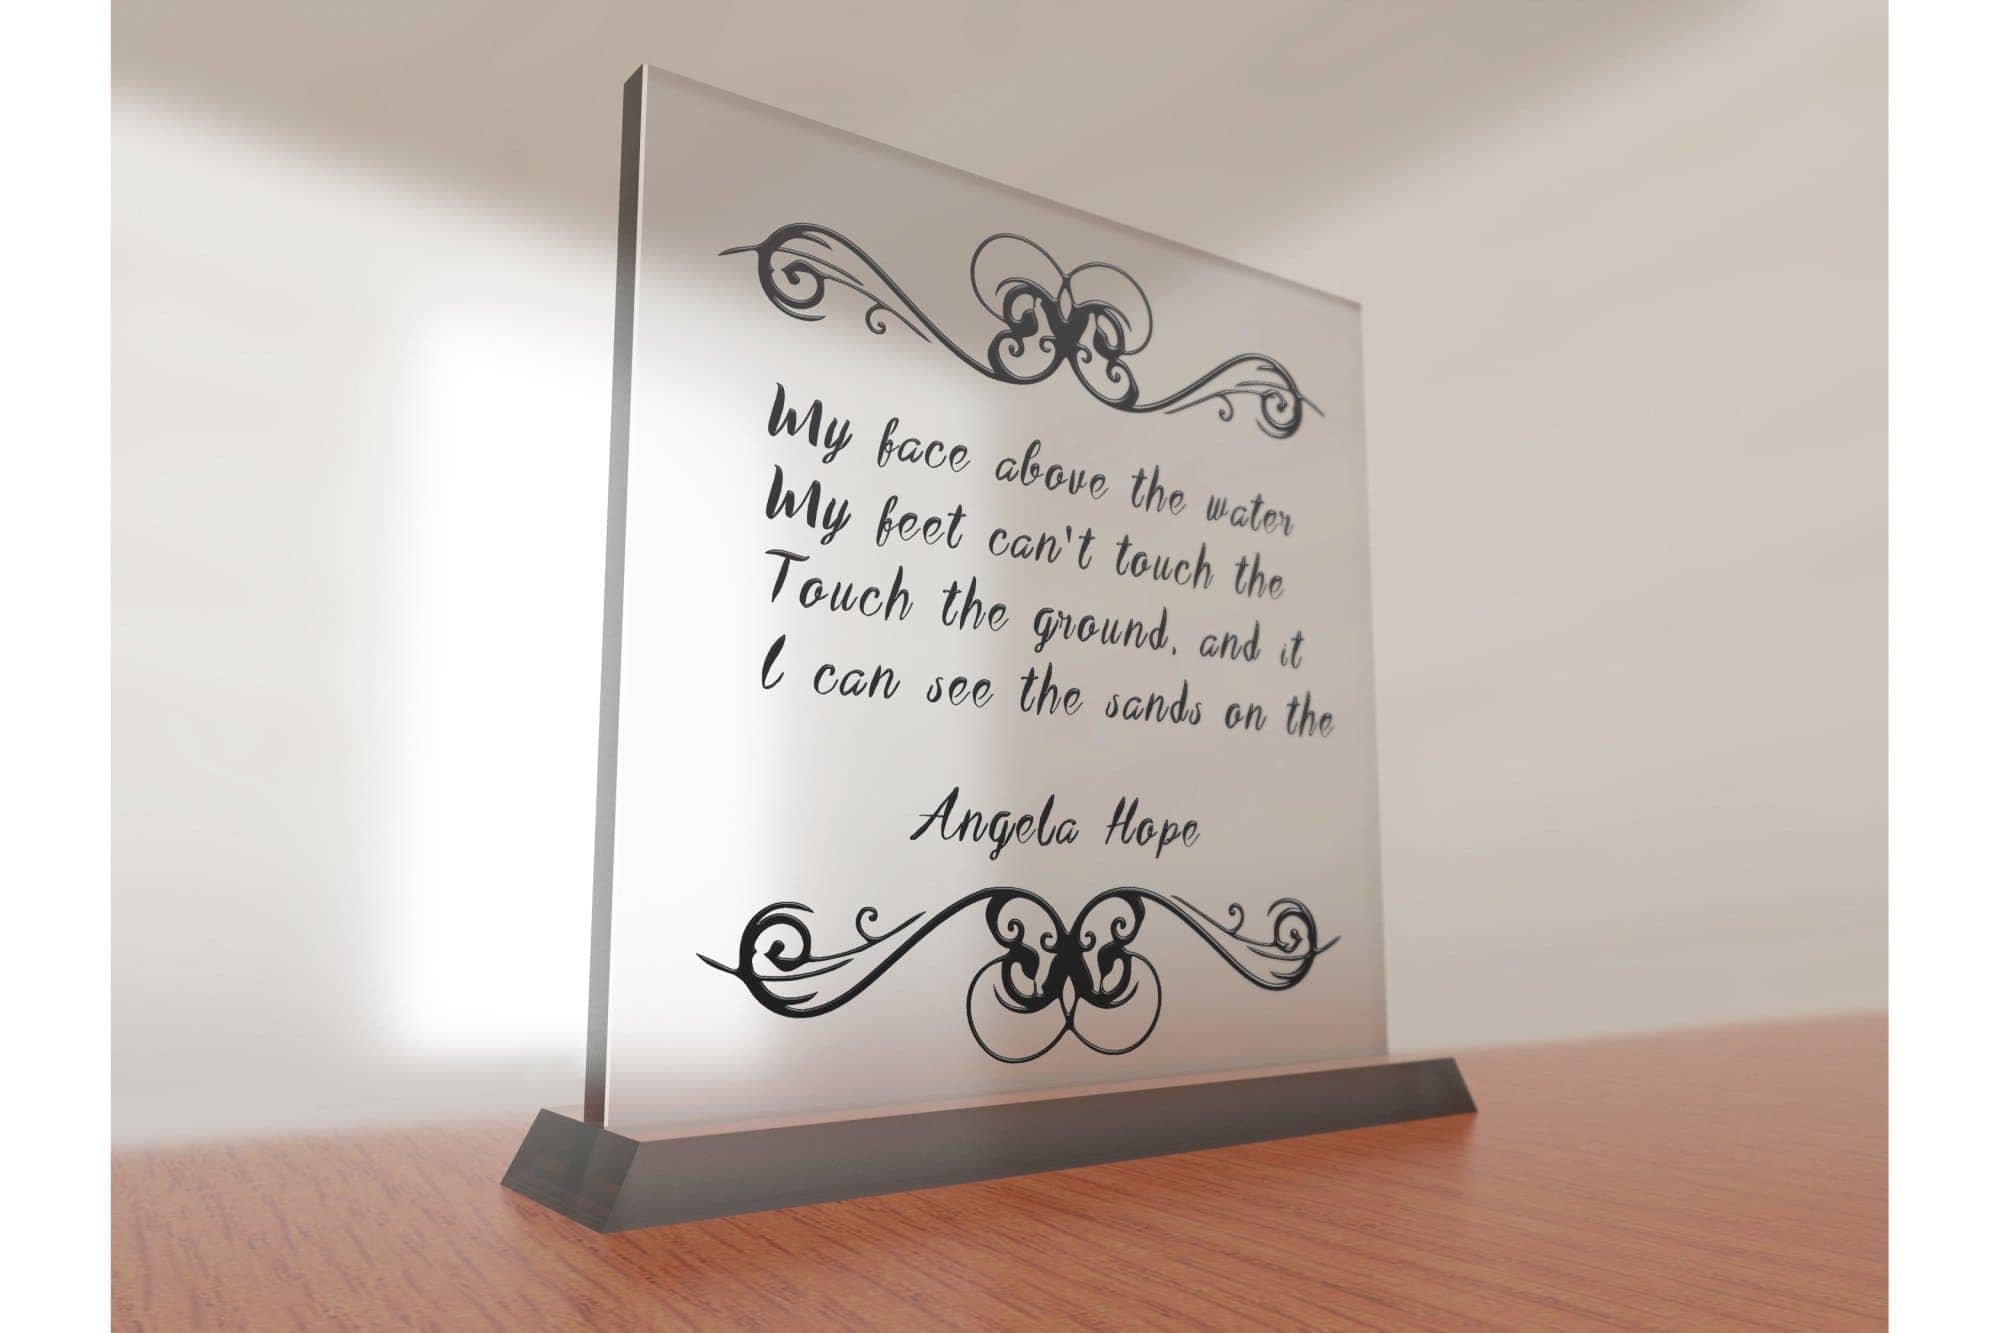 Transparent award using the Angela Hope font.